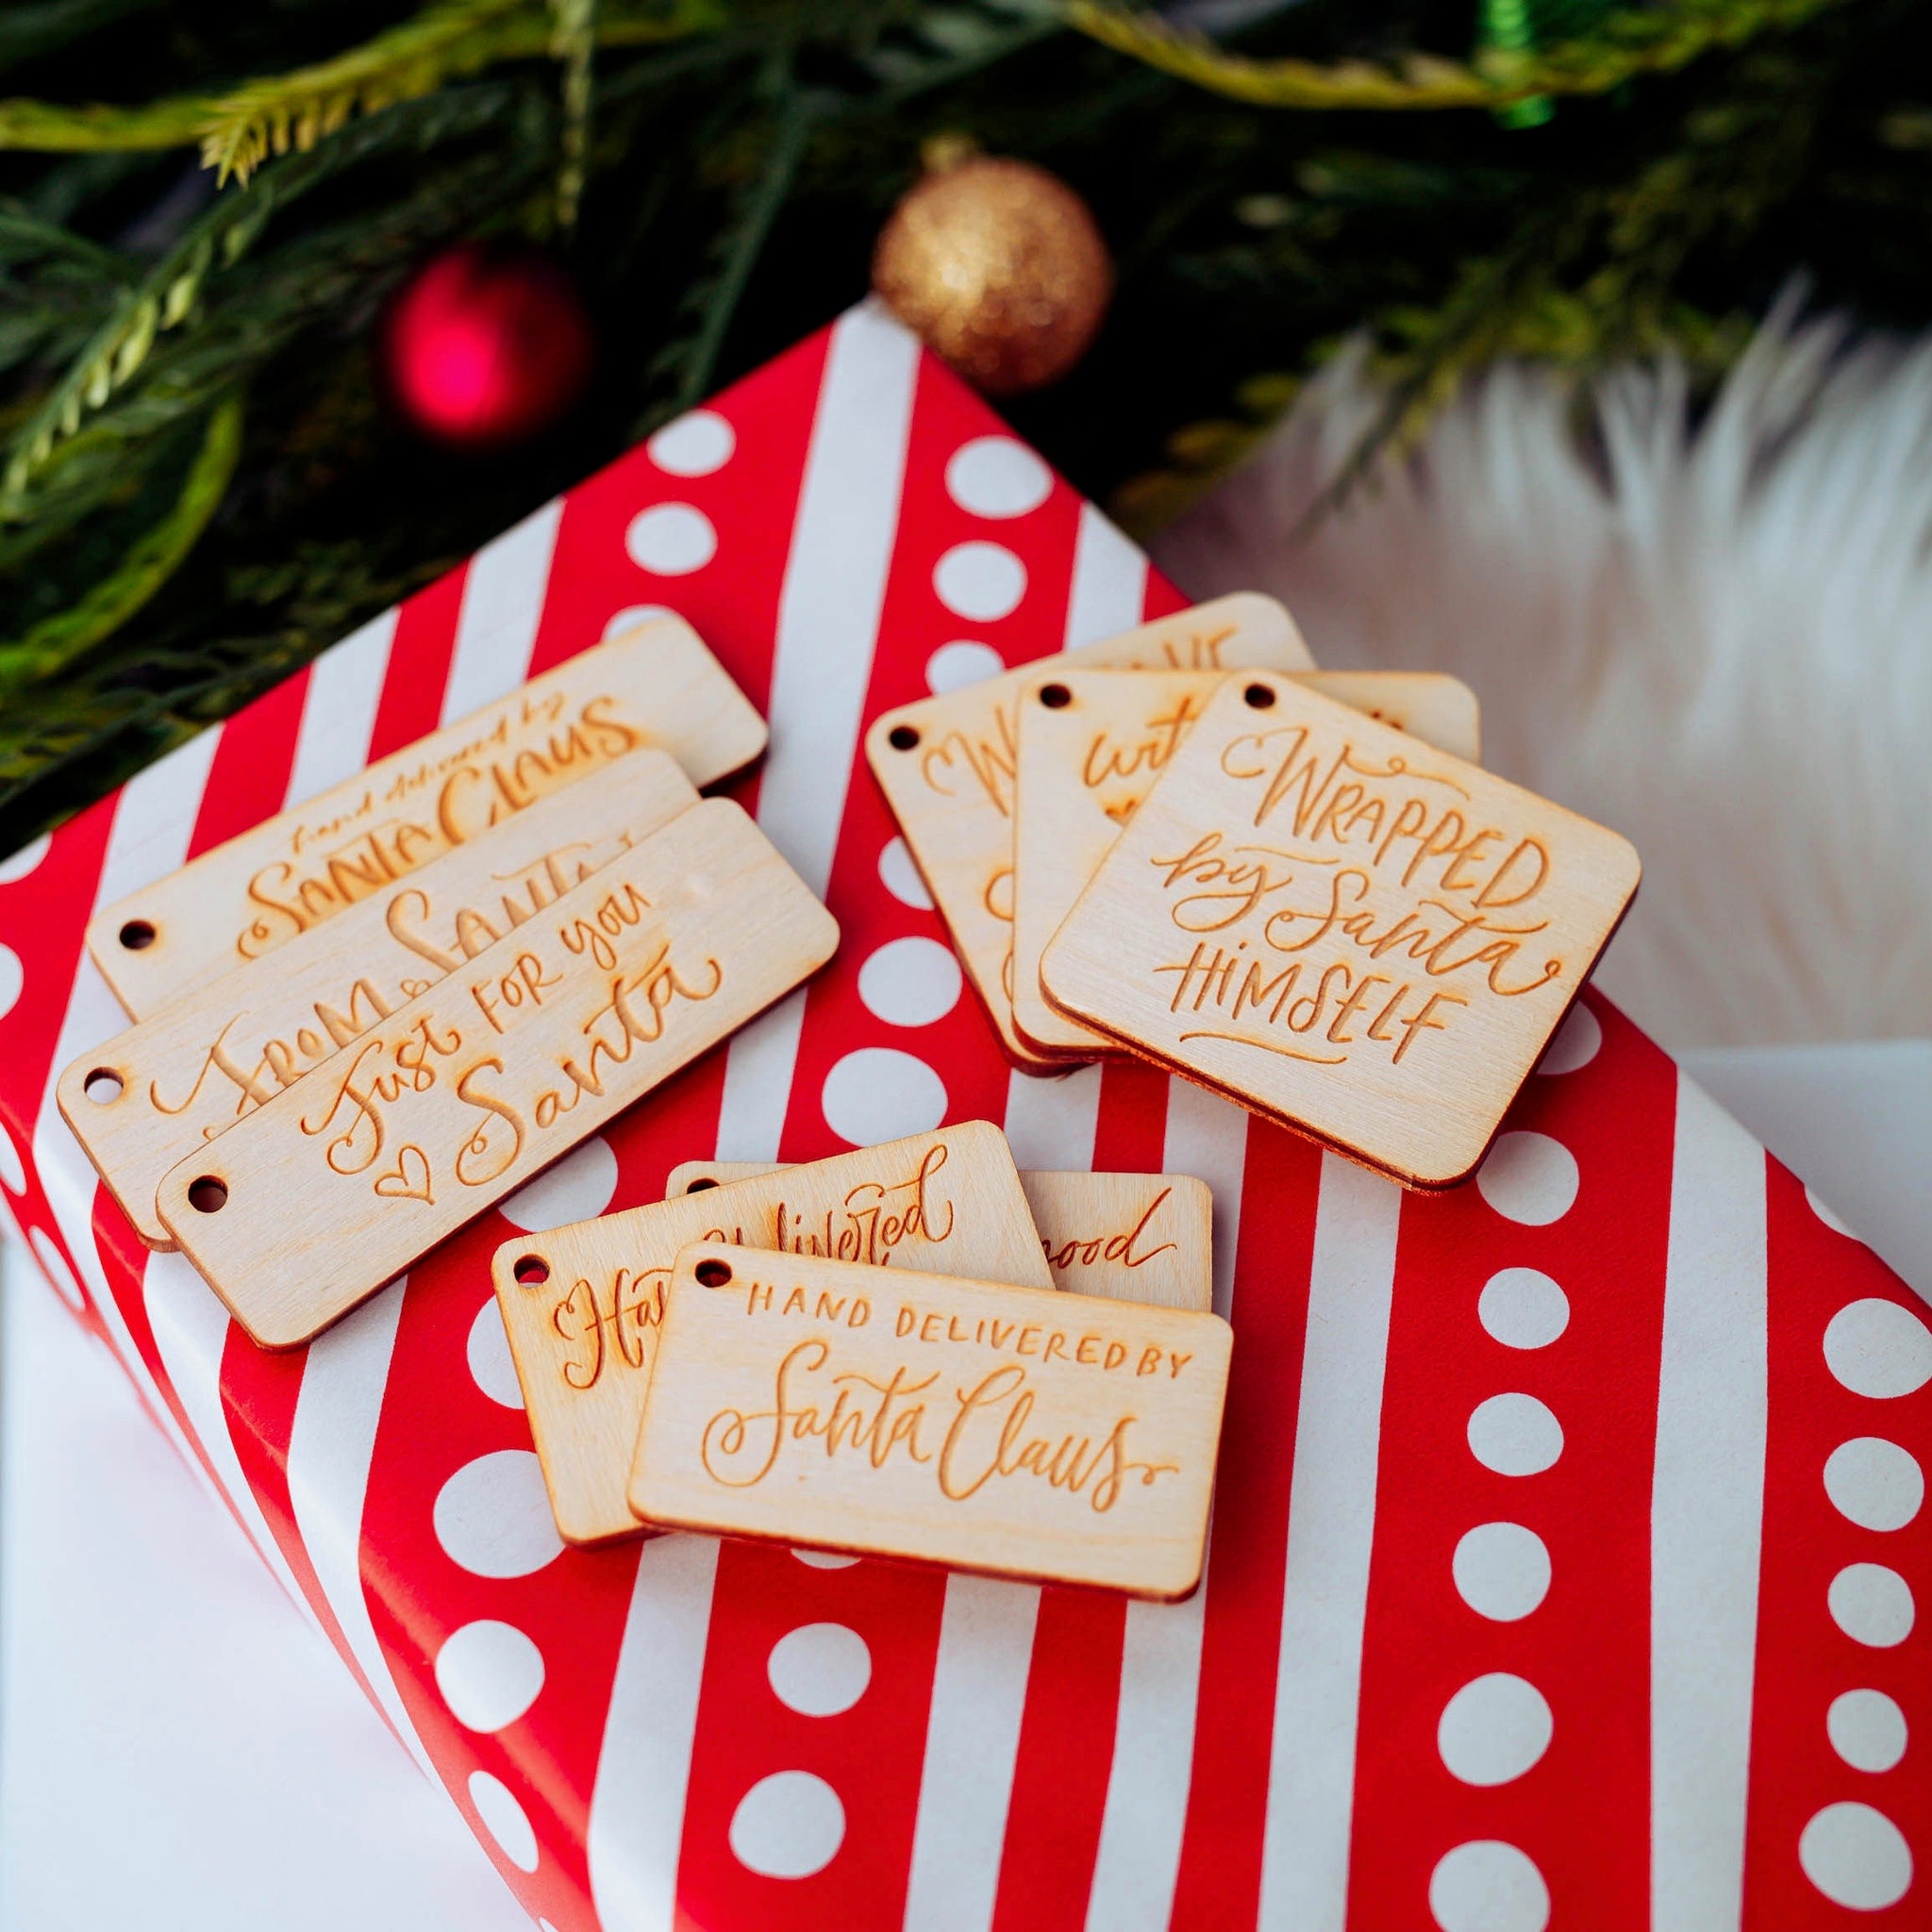 Christmas Gift Tags for Wrapping Presents, Love Santa - Sugar Crush Co.